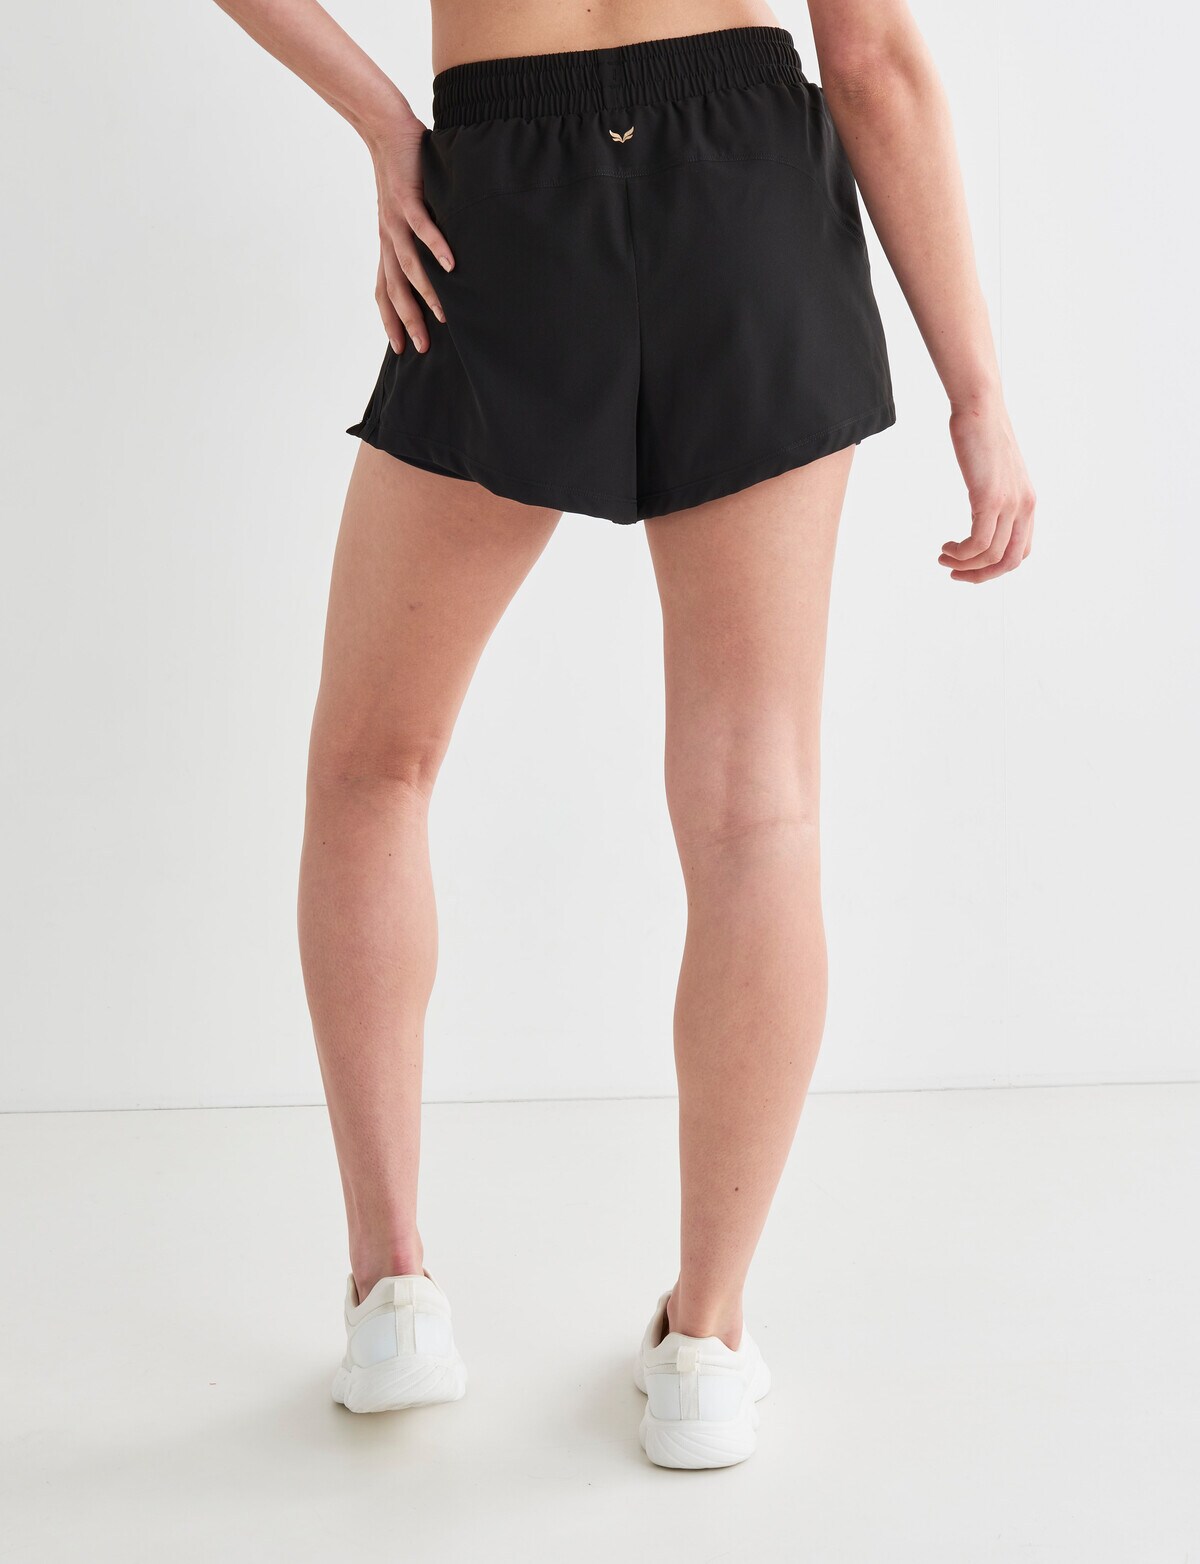 Soft Surroundings Womens Black Superla Stretch 9 Walking Shorts